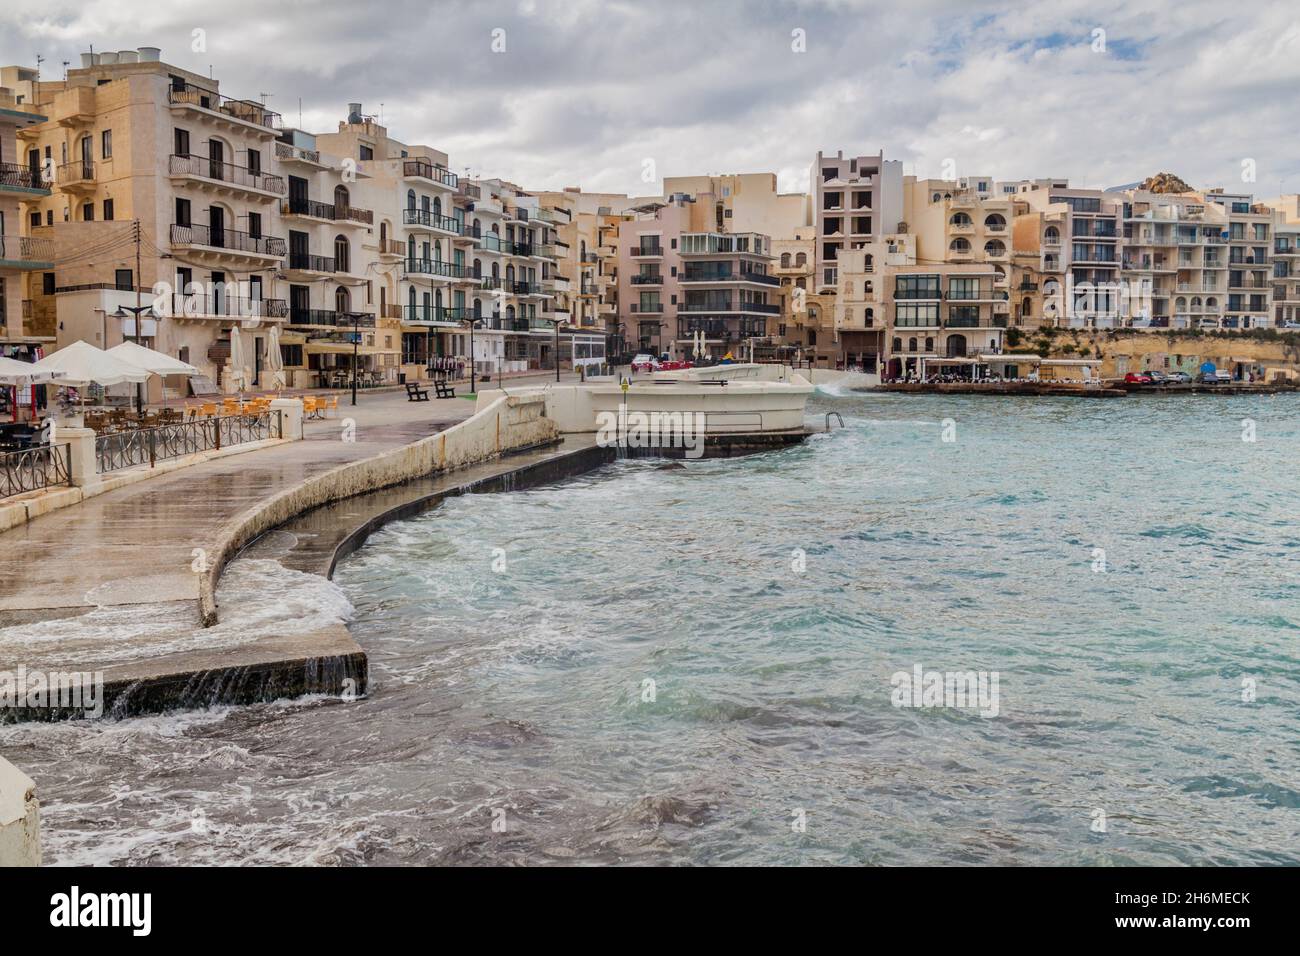 Rough seas in Marsalforn on Gozo island, Malta Stock Photo